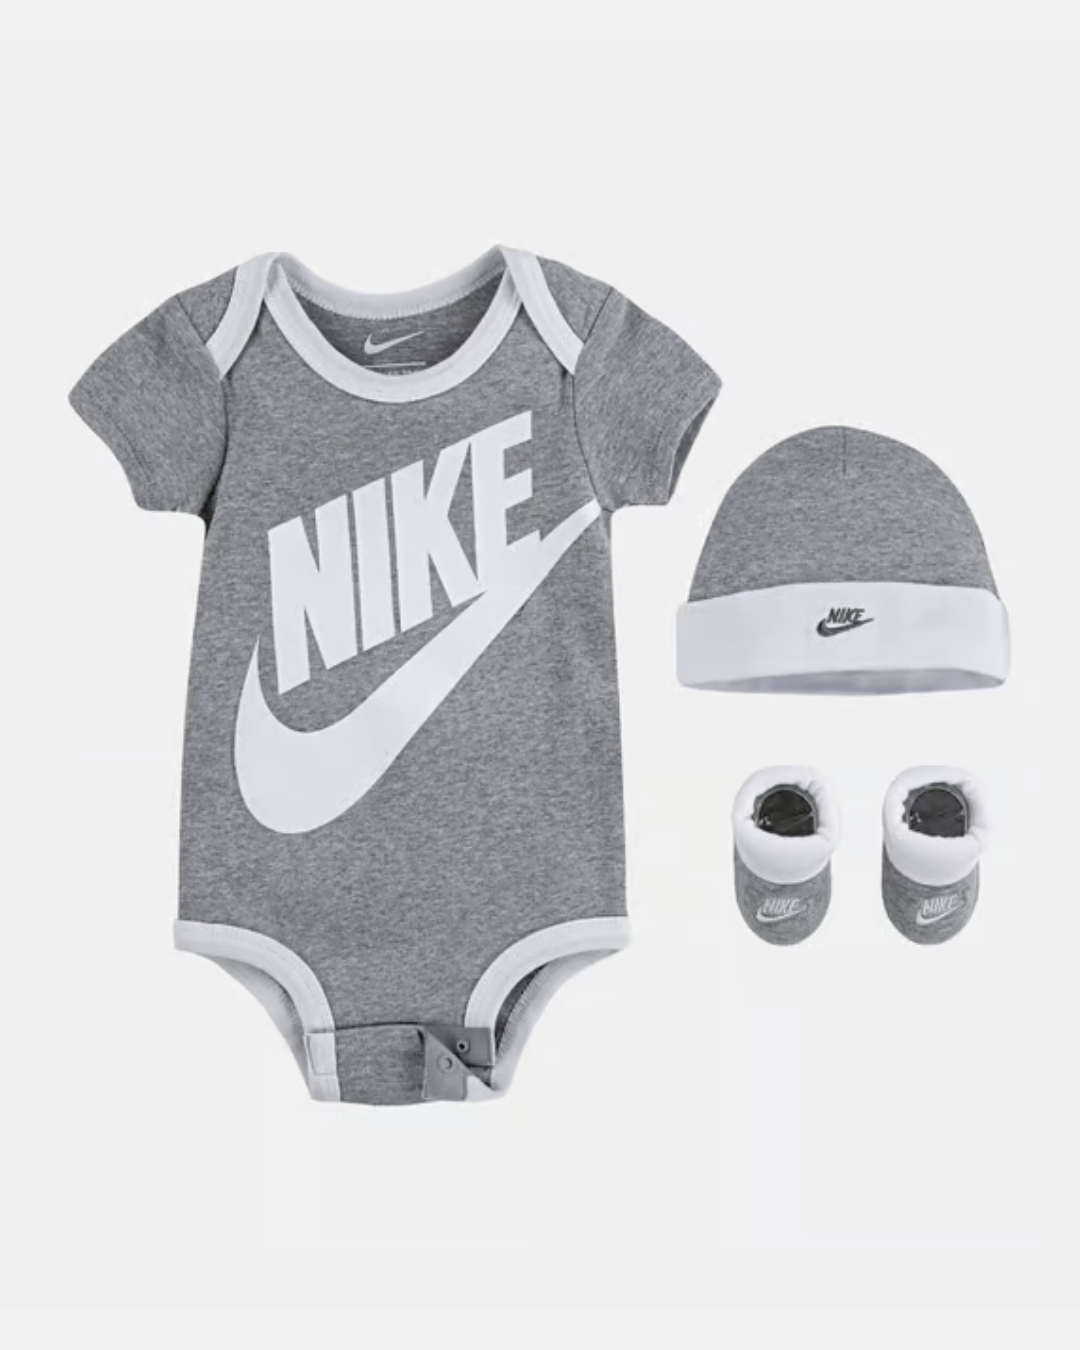 Nike Baby 3-Piece Set - Grey/White 